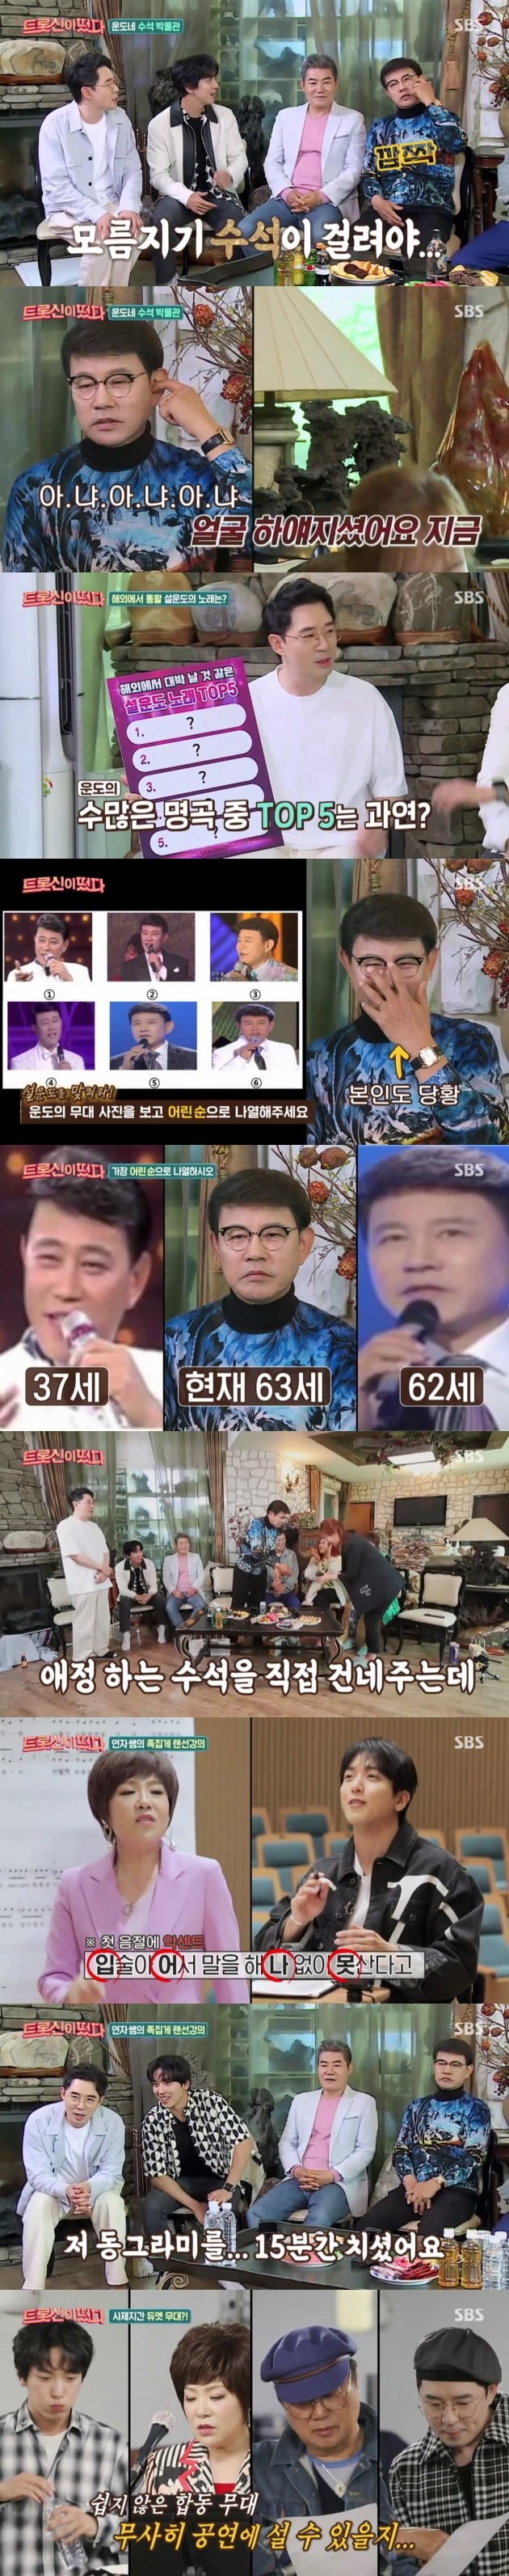 SBS '트롯신이 떴다' 캡처. 